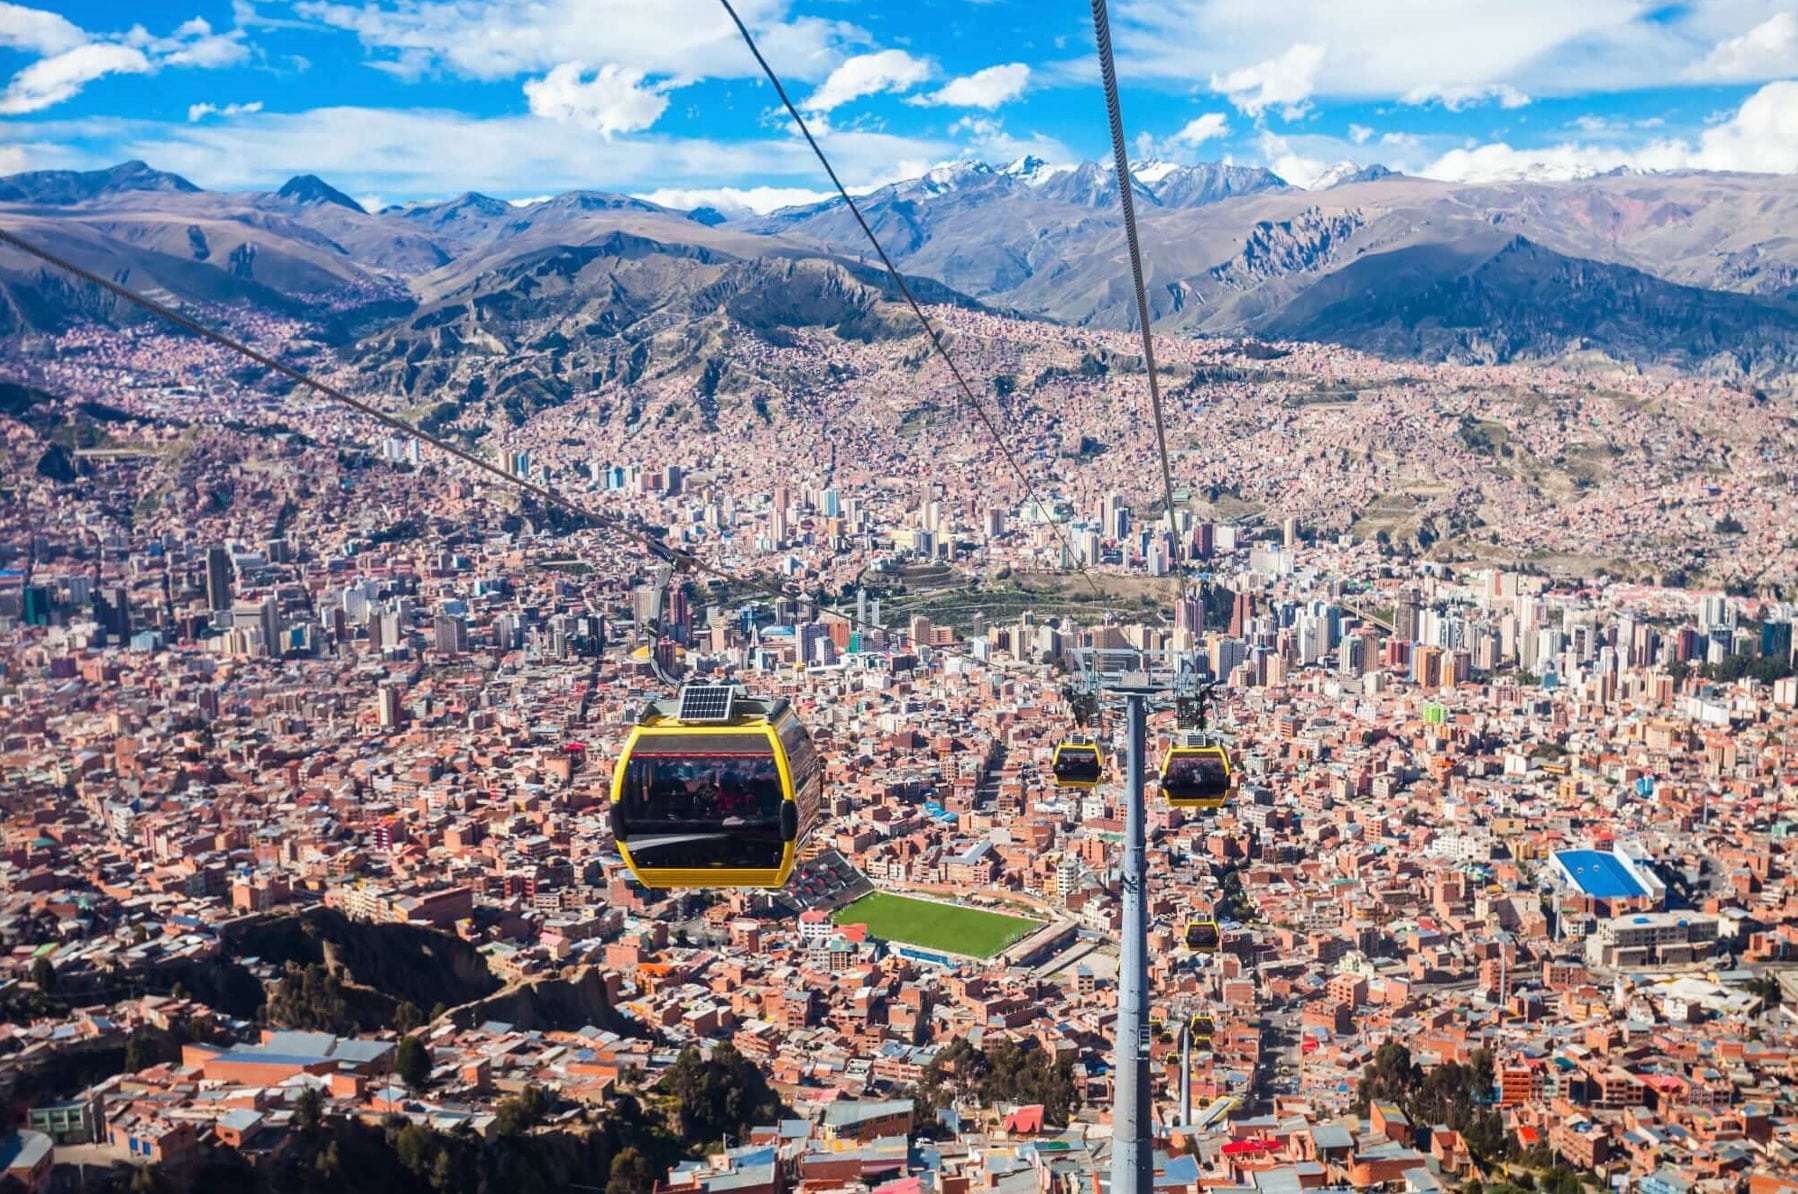 The city of La Paz, Bolivia